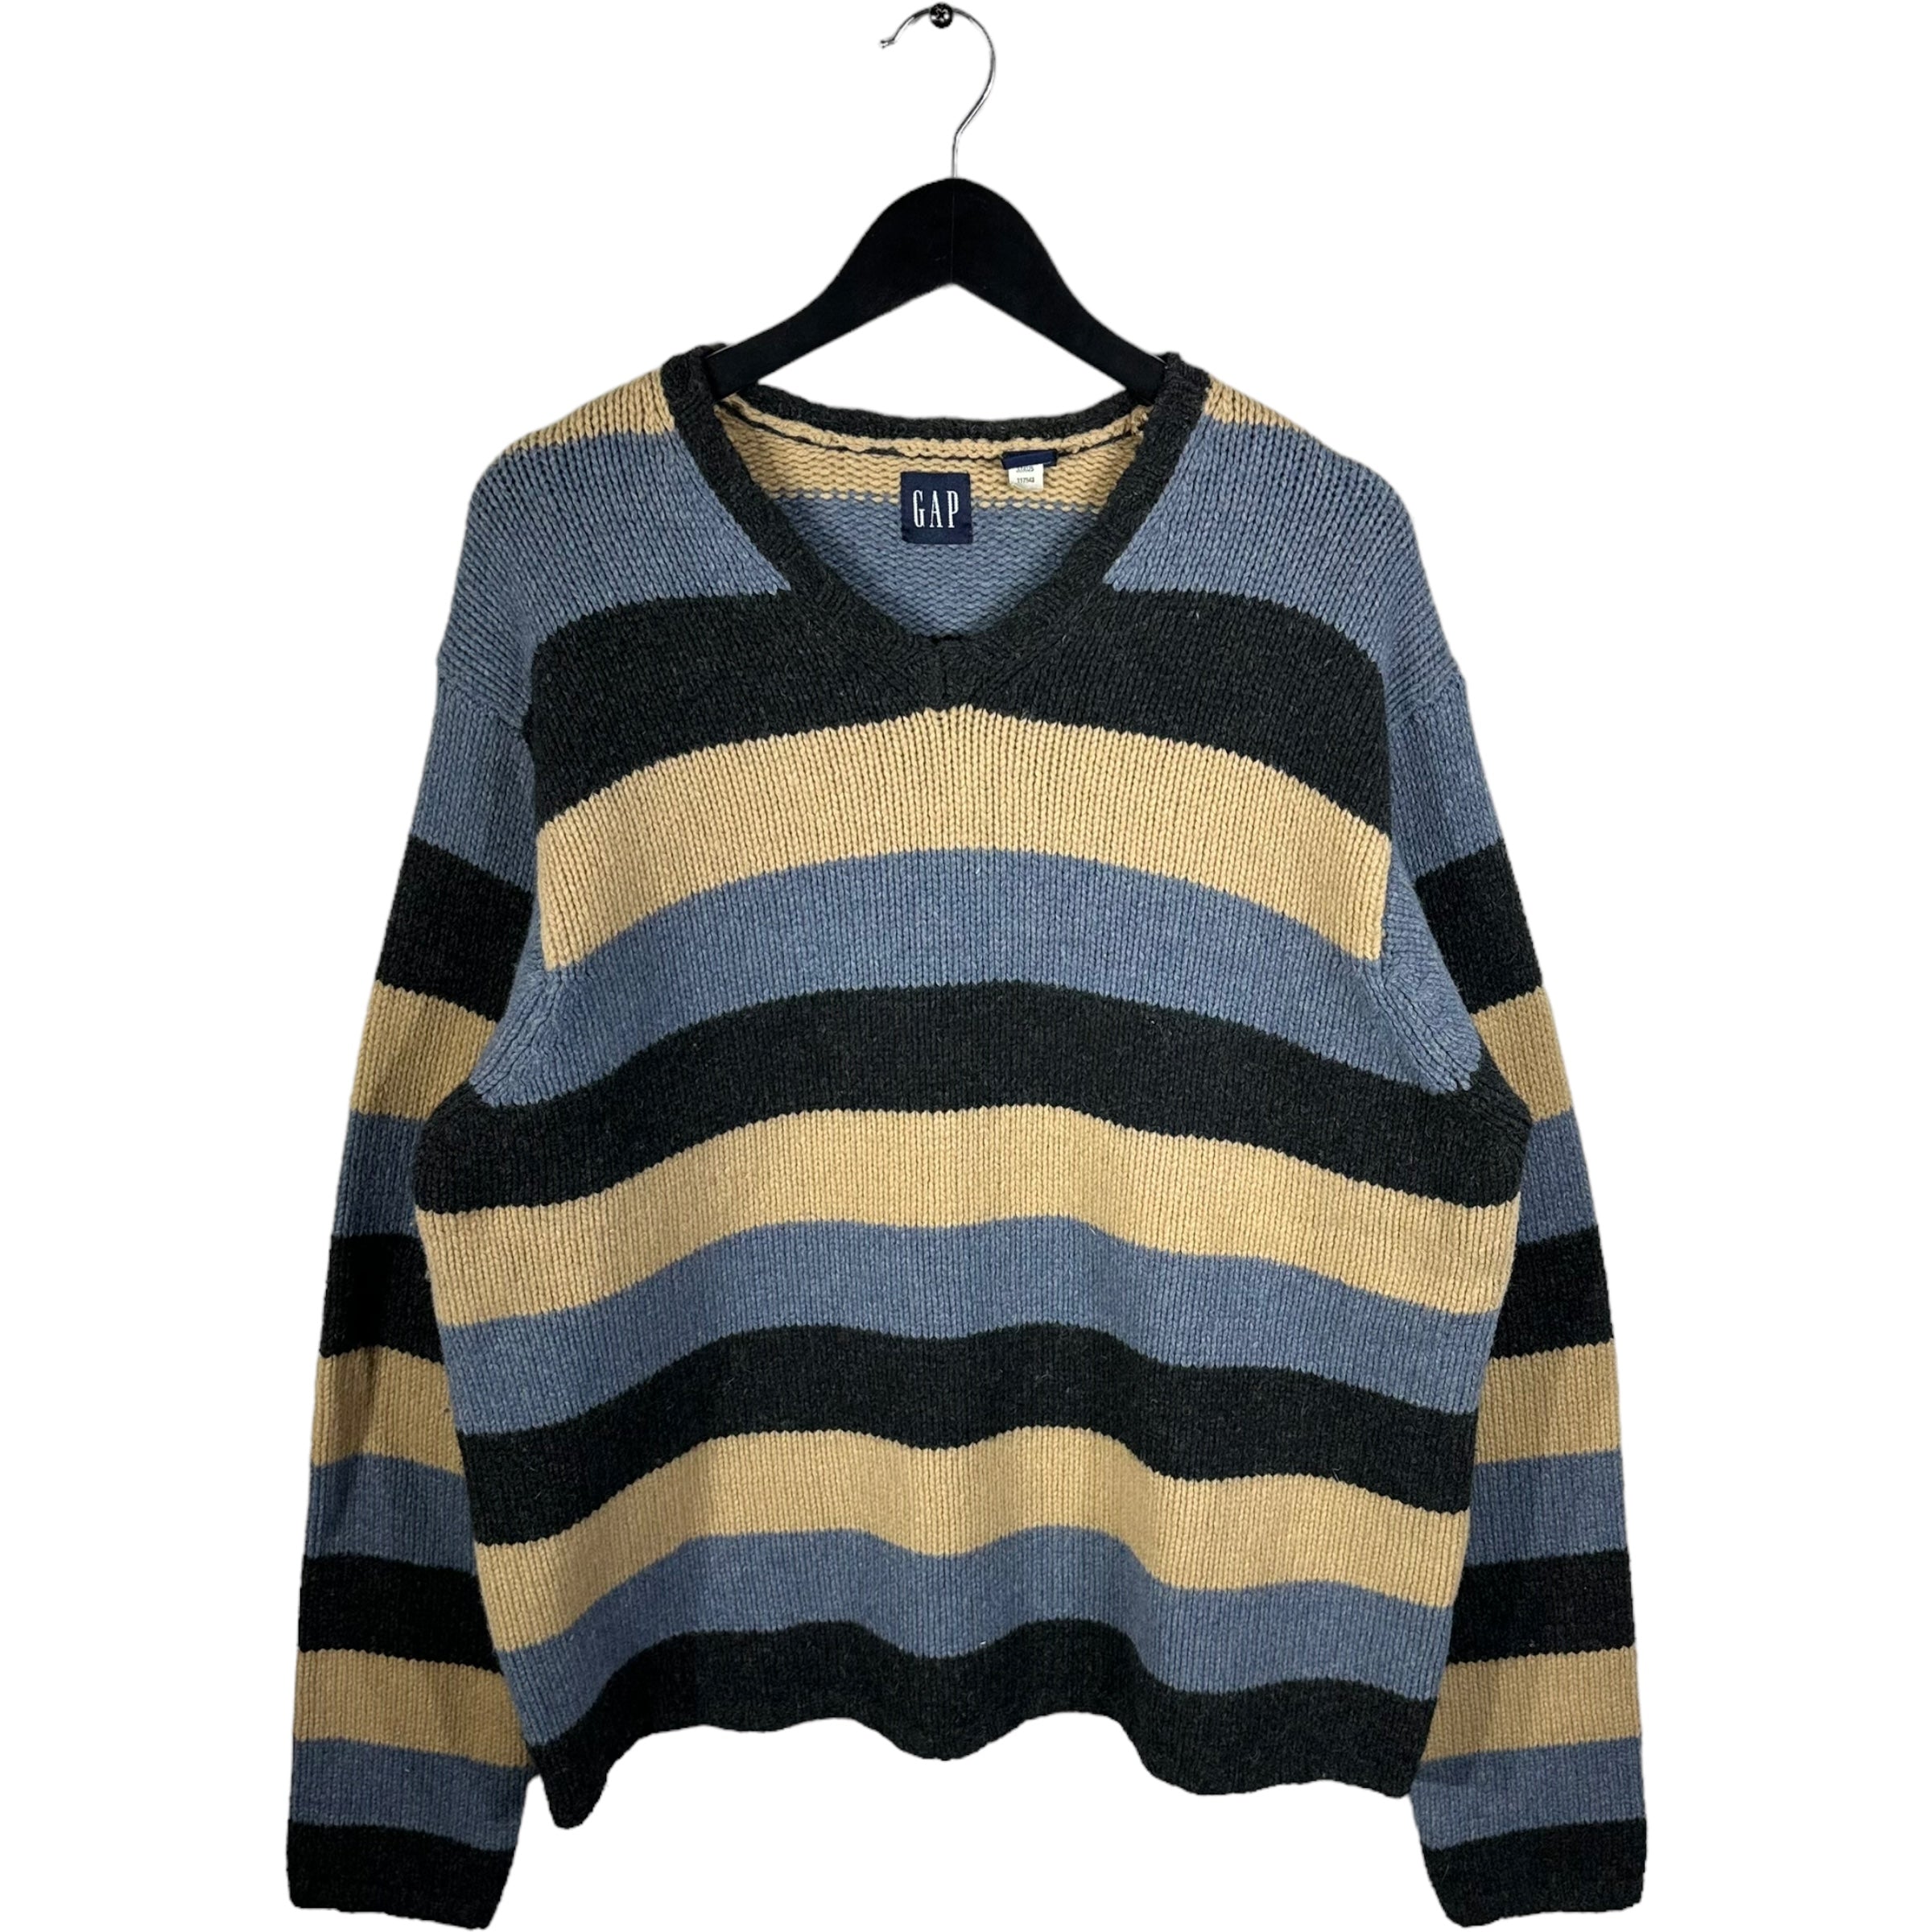 Vintage Gap Striped Lambswool Knit Sweater